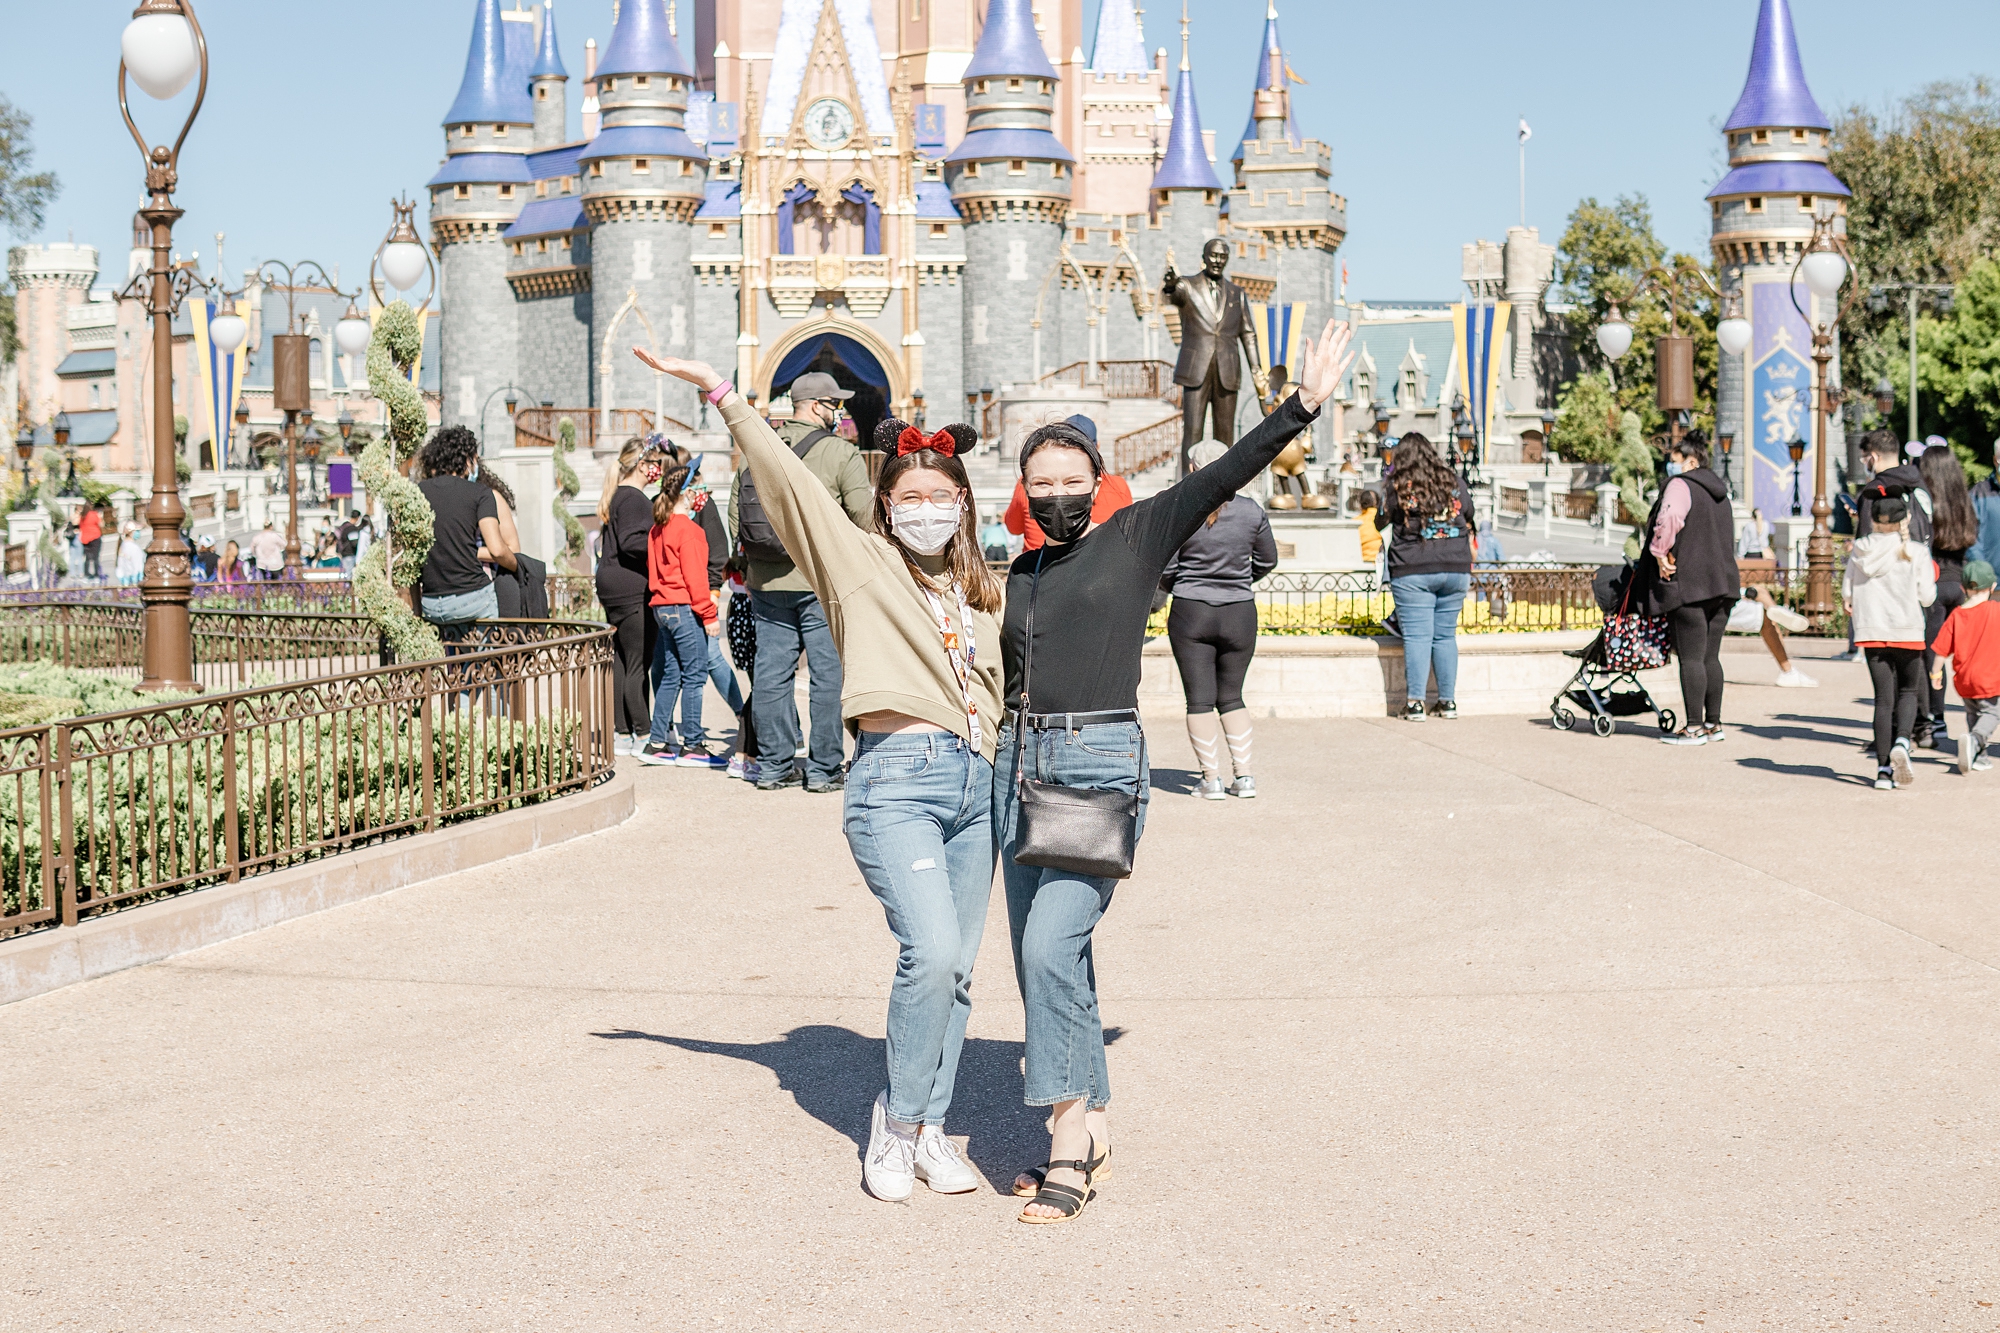 friends pose by castle in Magic Kingdom